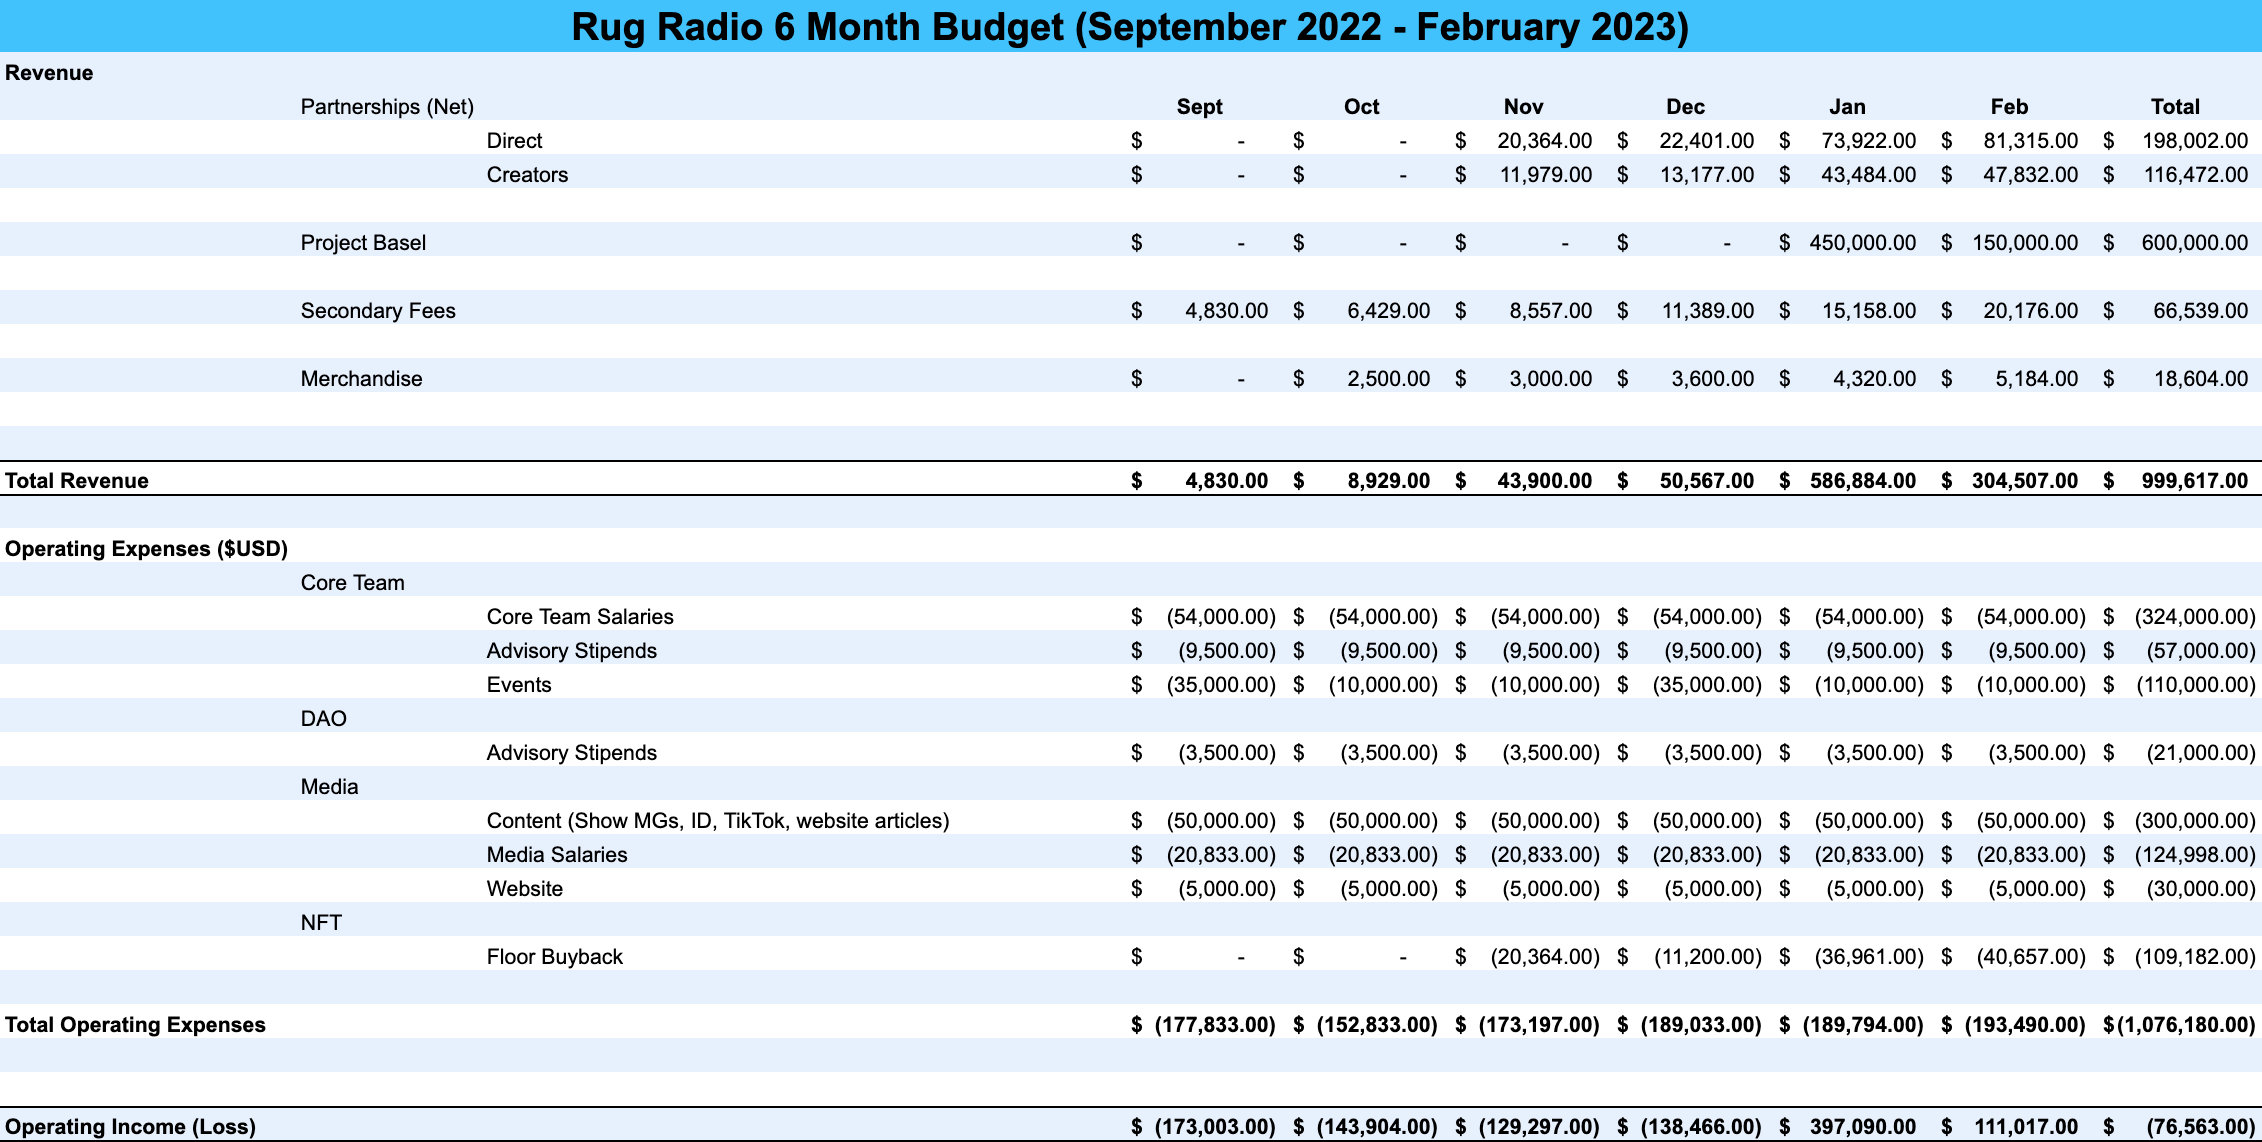 Rug Radio 6 Month Budget (September 2022 - February 2023)